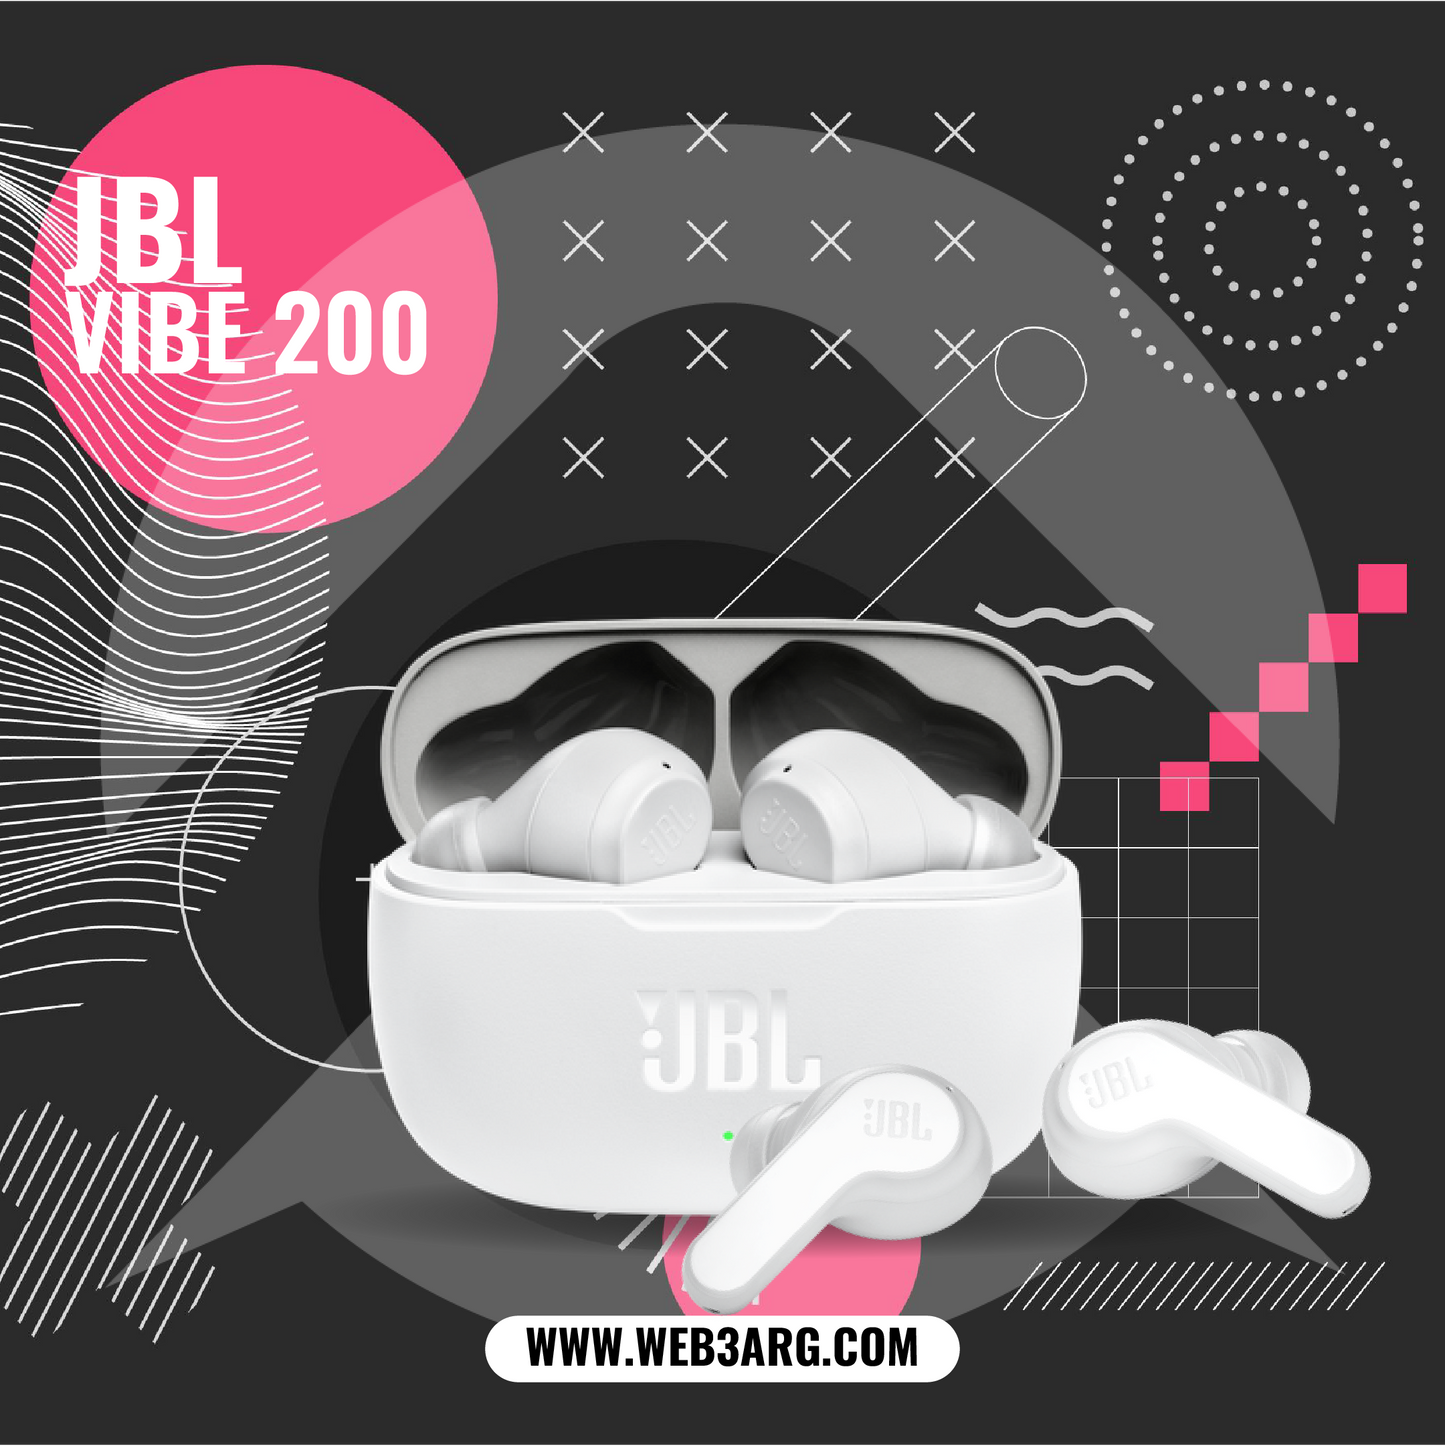 AURICULARES JBL VIBE 200 TRUE WIRELESS IN-EAR EARBUDS WHITE - Premium Auriculares de JBL - Solo $102750! Compra ahora Web3Arg